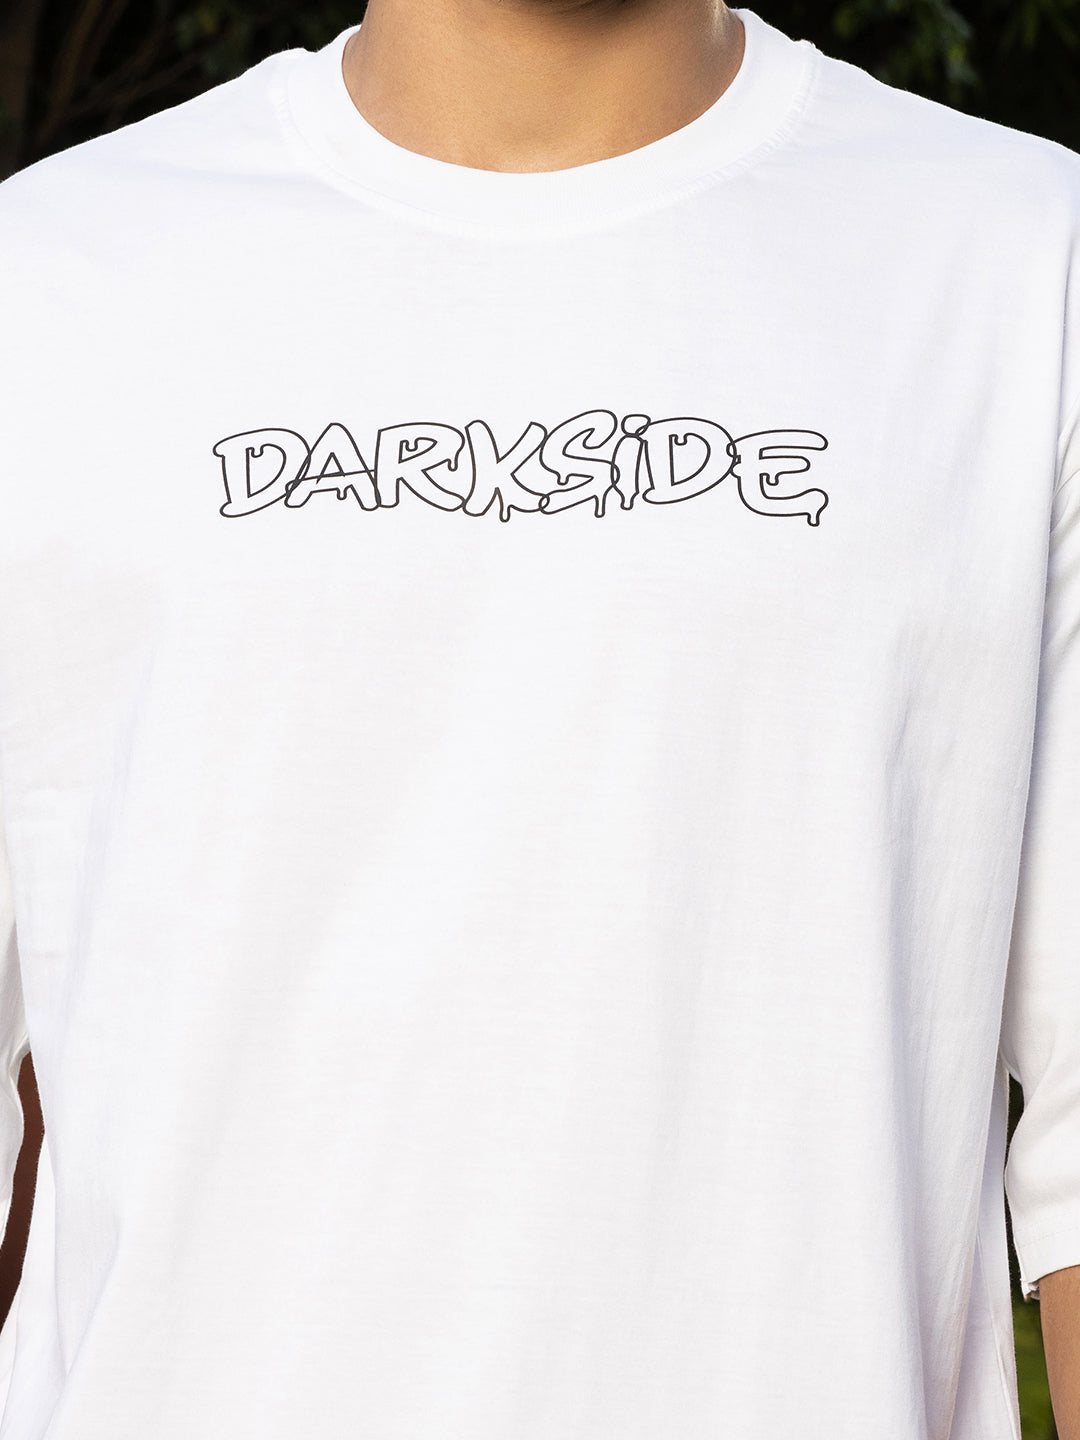 Darkside White Oversized Drop shoulder Tee by Stylo Fashion